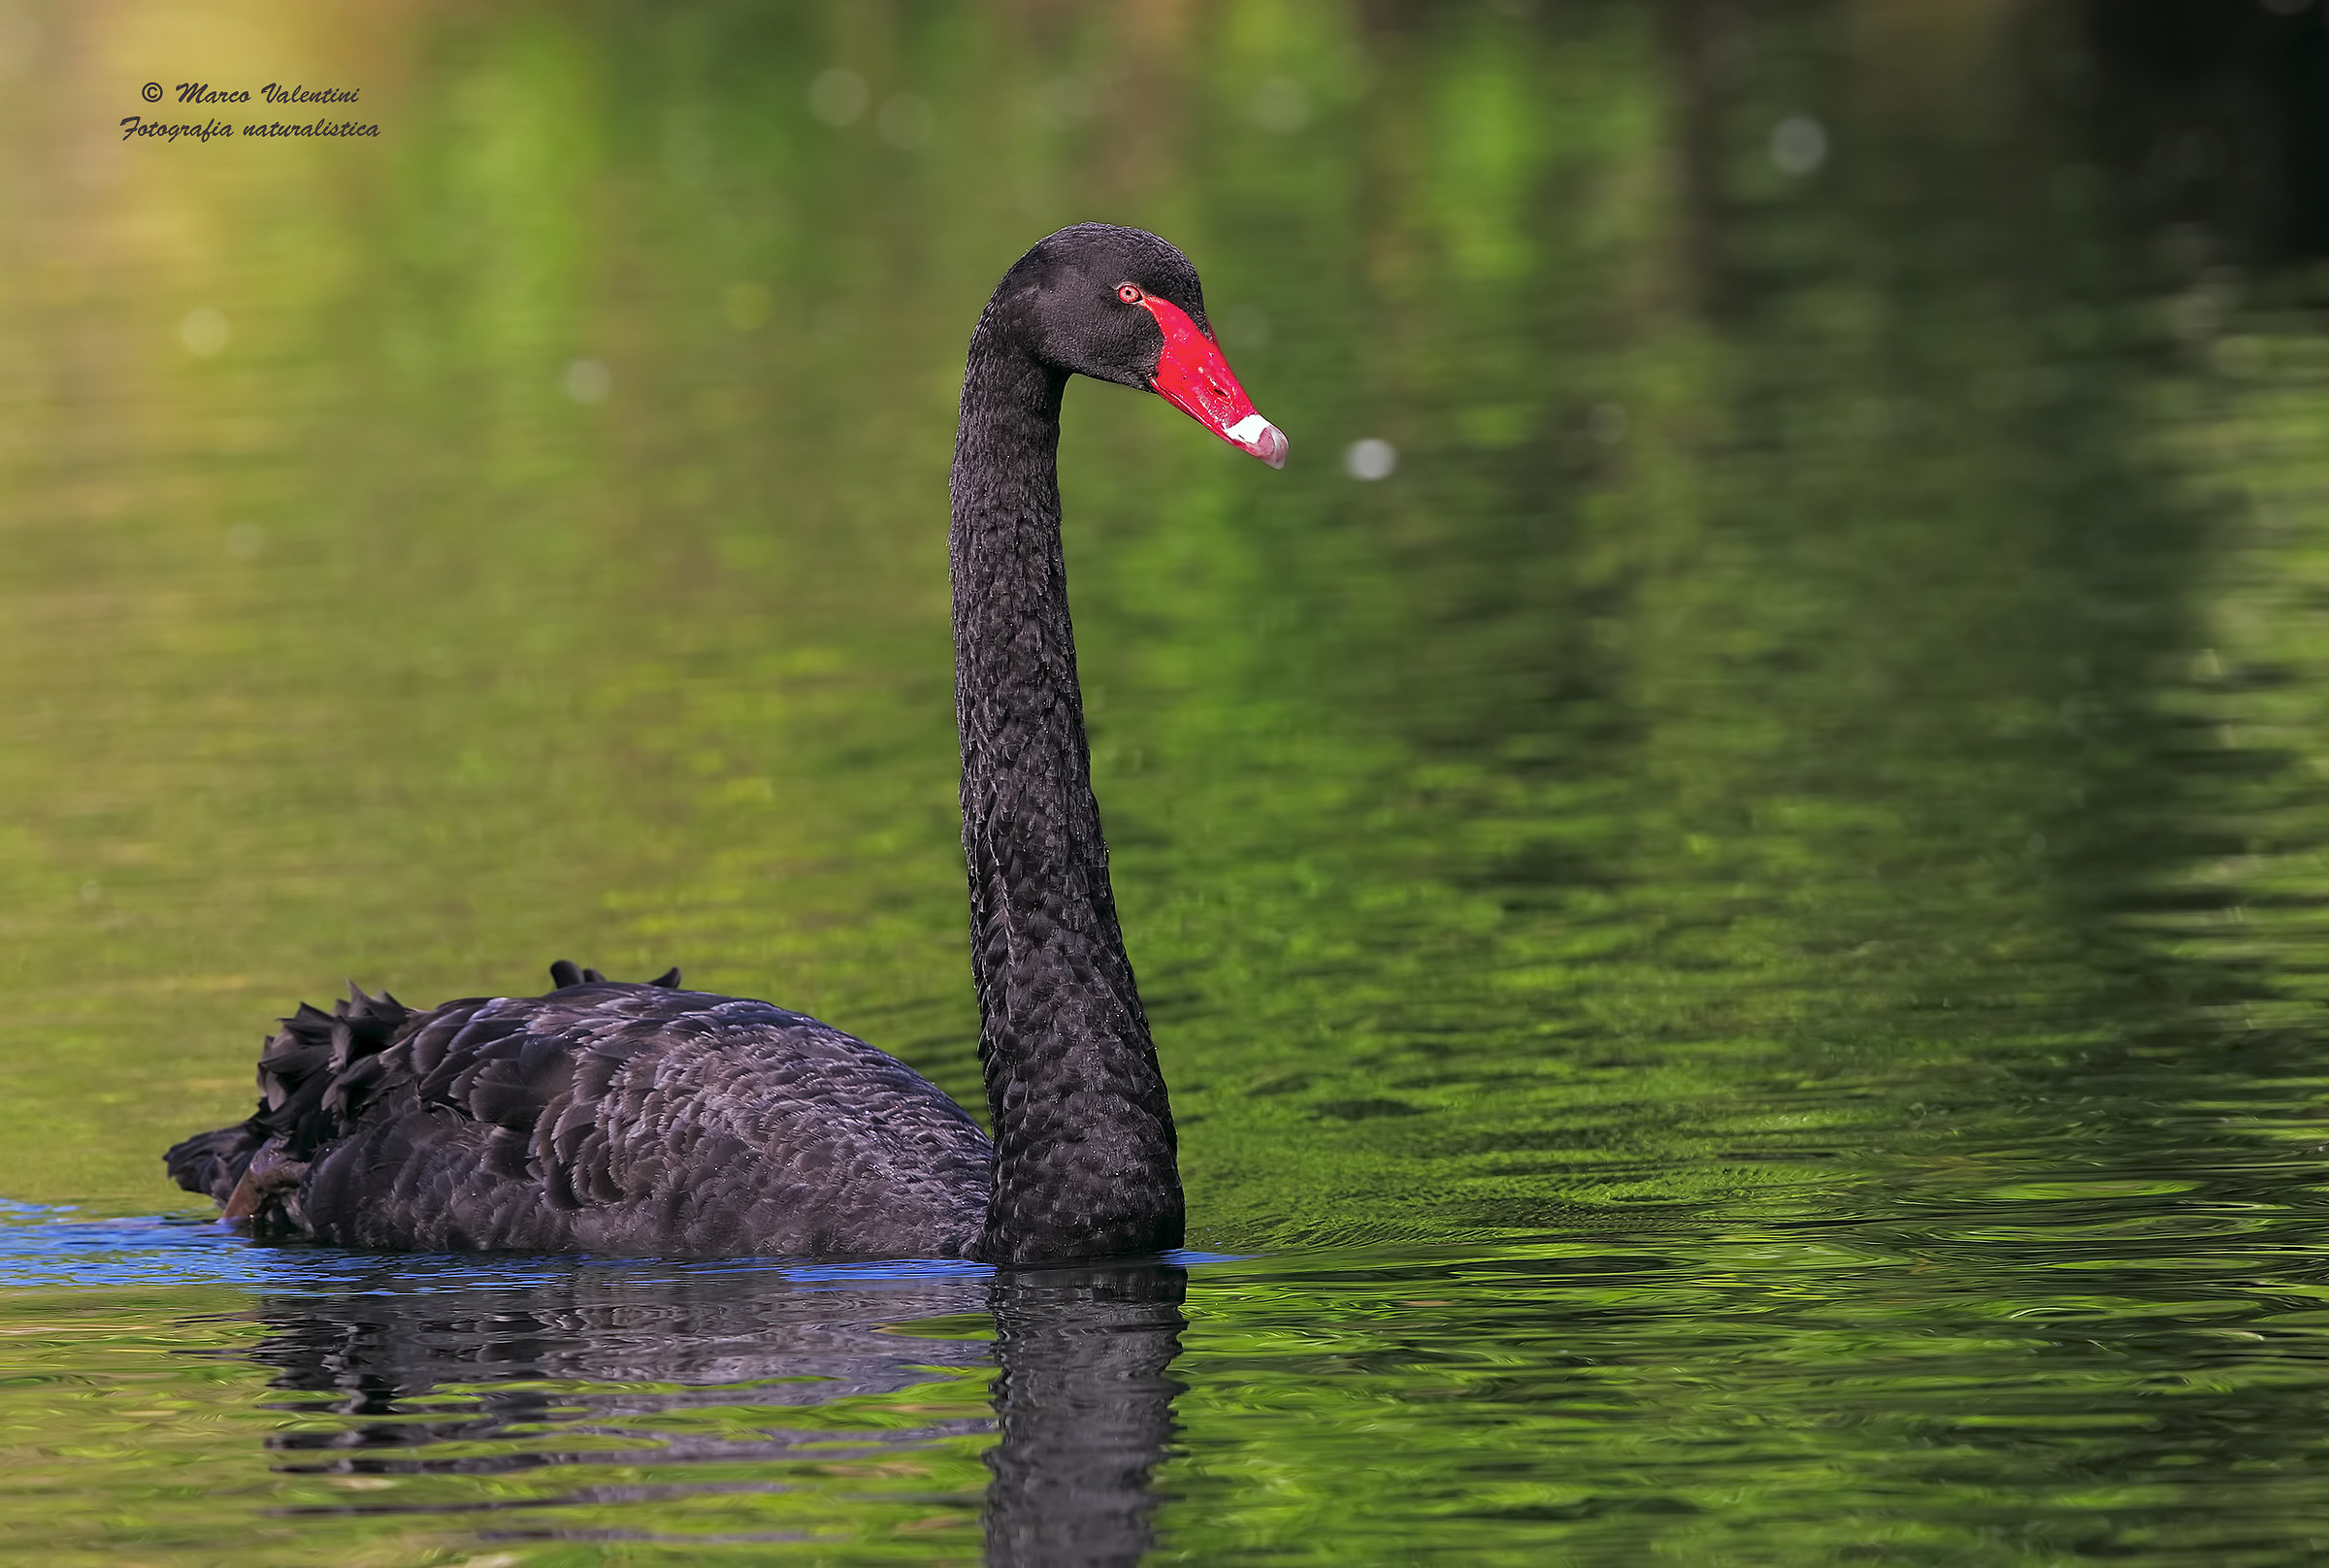 The black Swan...